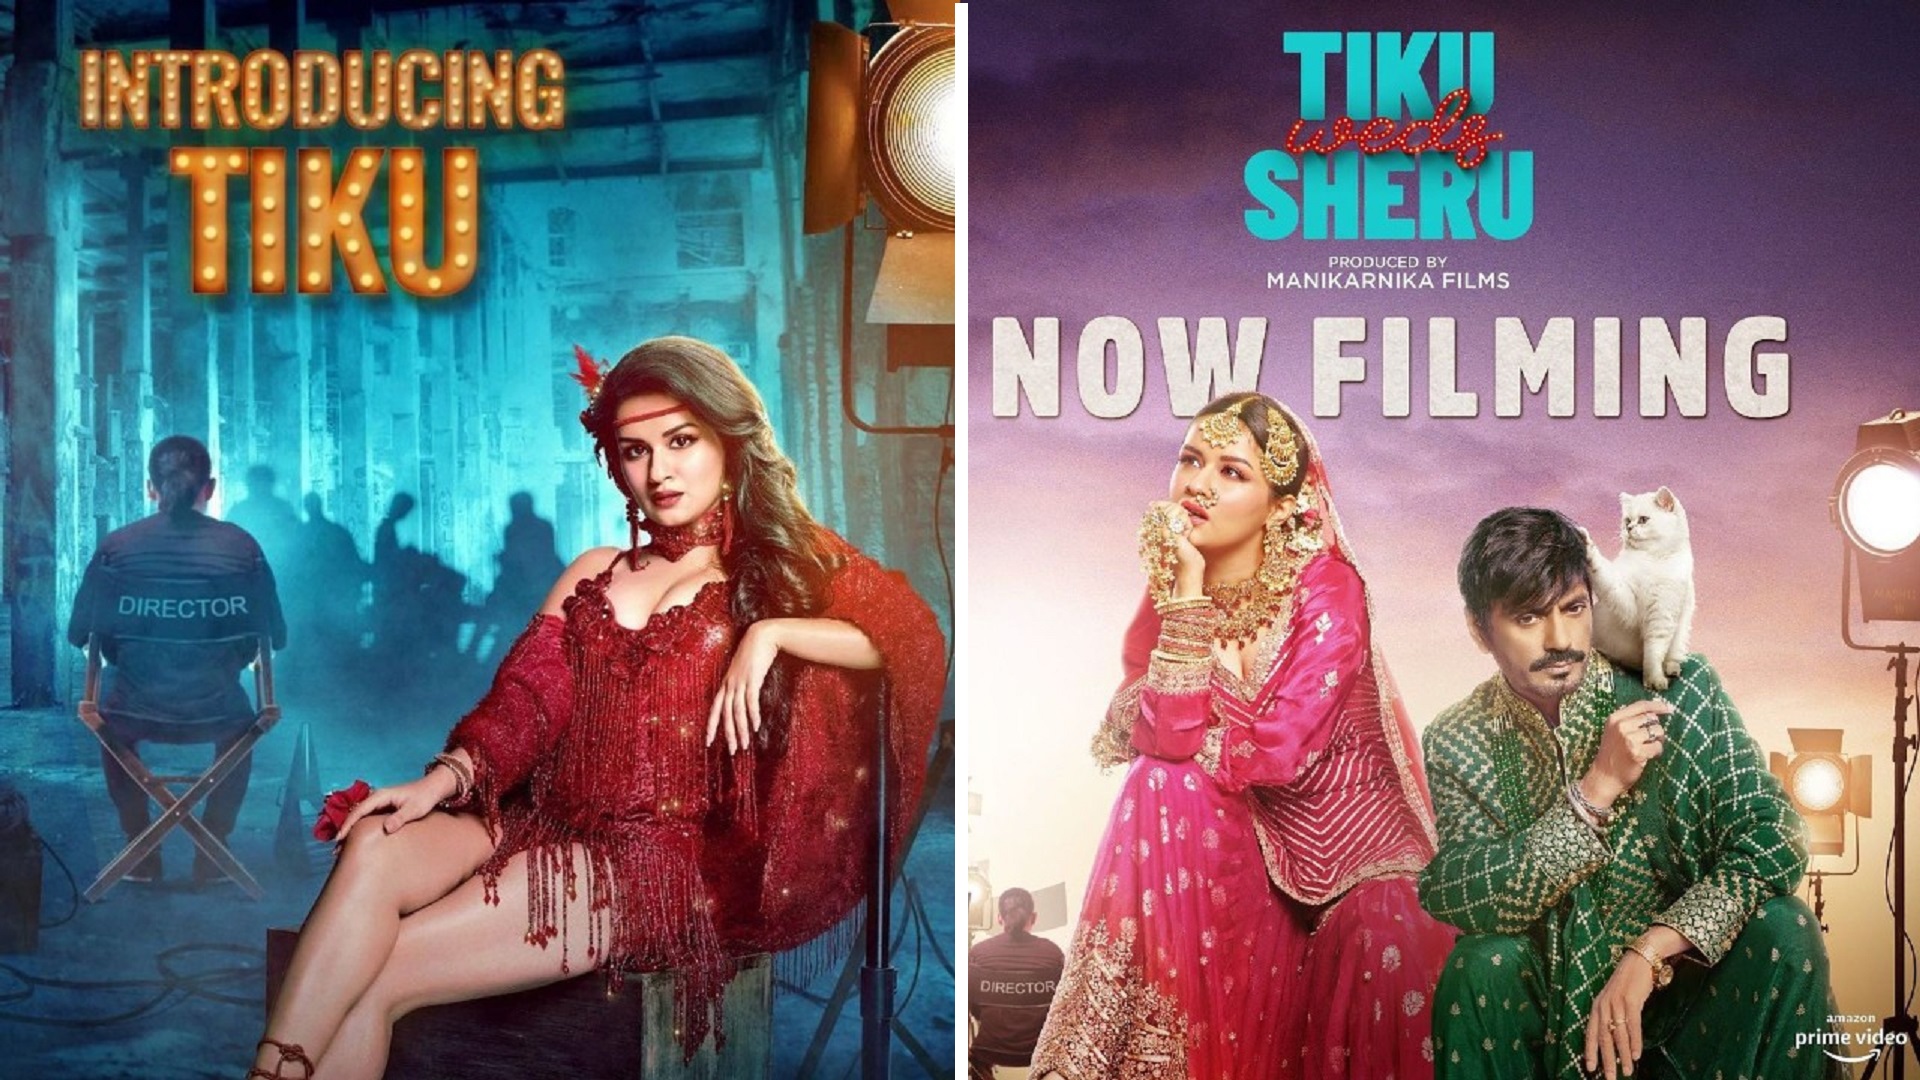 Kangana Ranaut Shares First Look Of ‘Tiku Weds Sheru’ Under Manikarnika Films, Announces Film’s Actress